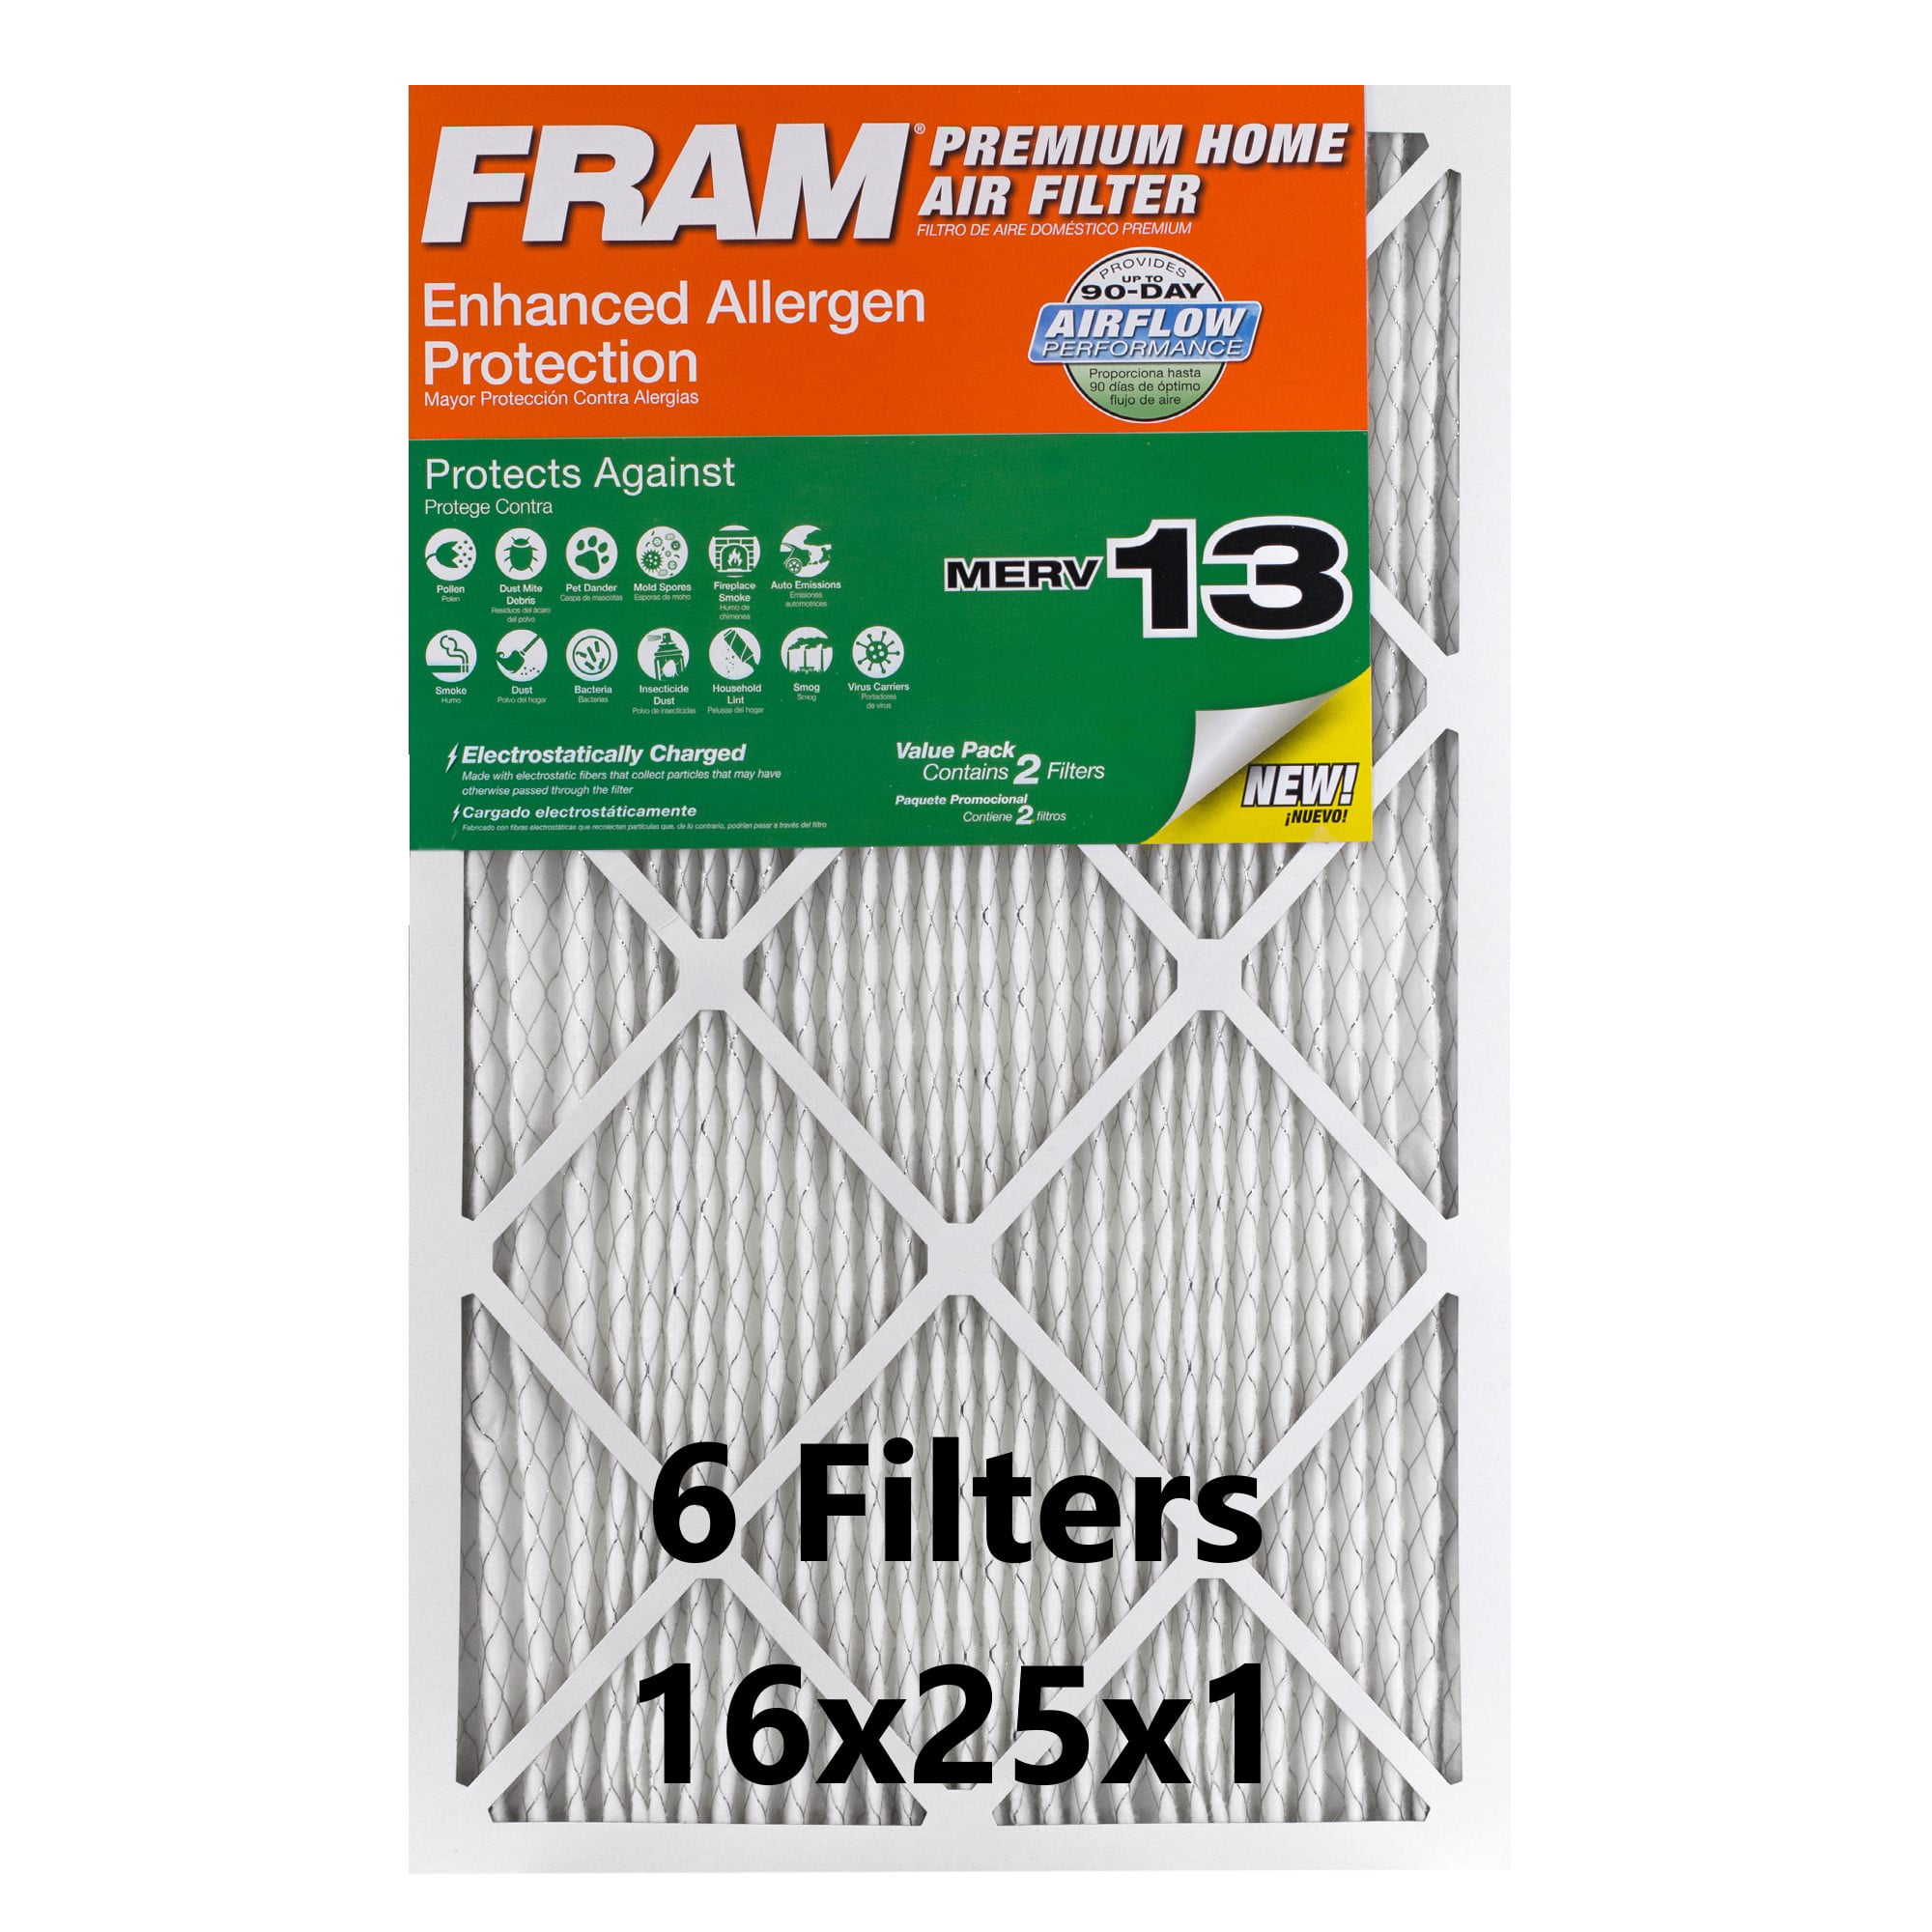 Details about   6pk Furnace Air Filter 16x25x1 MERV 13 FRAM Home w/Enhanced Allergen Protection 